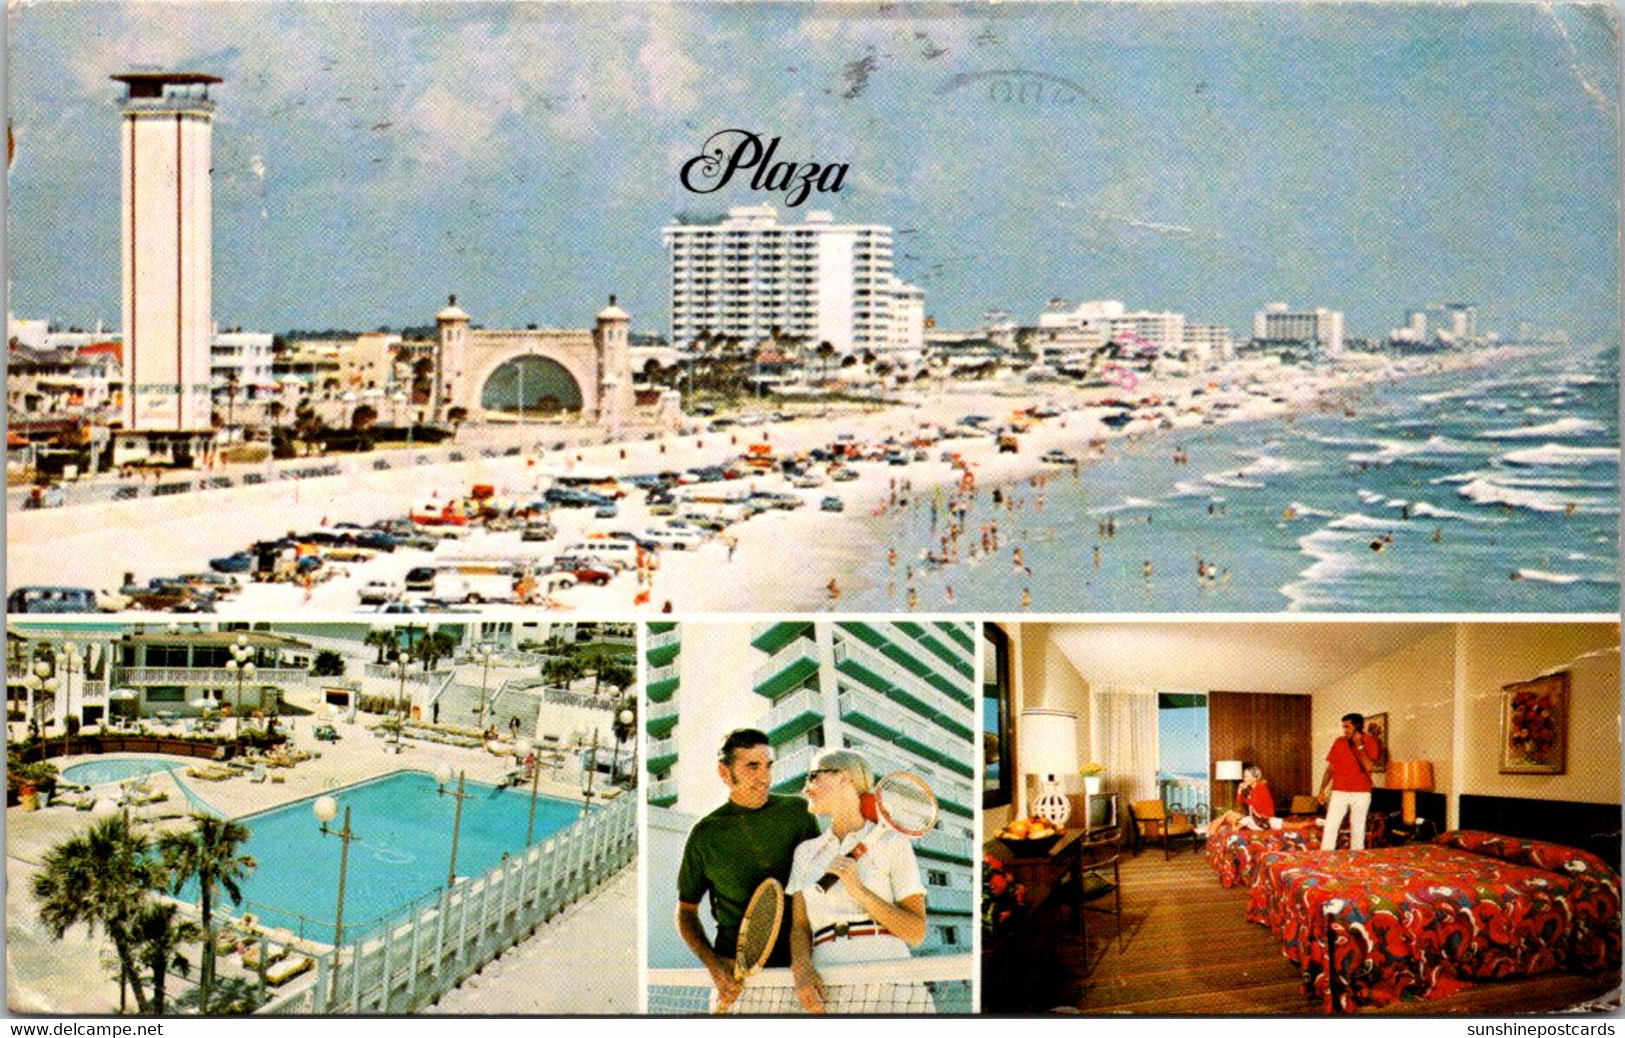 Florida Daytona Beach The Plaza Hotel Multi View 1976 - Daytona